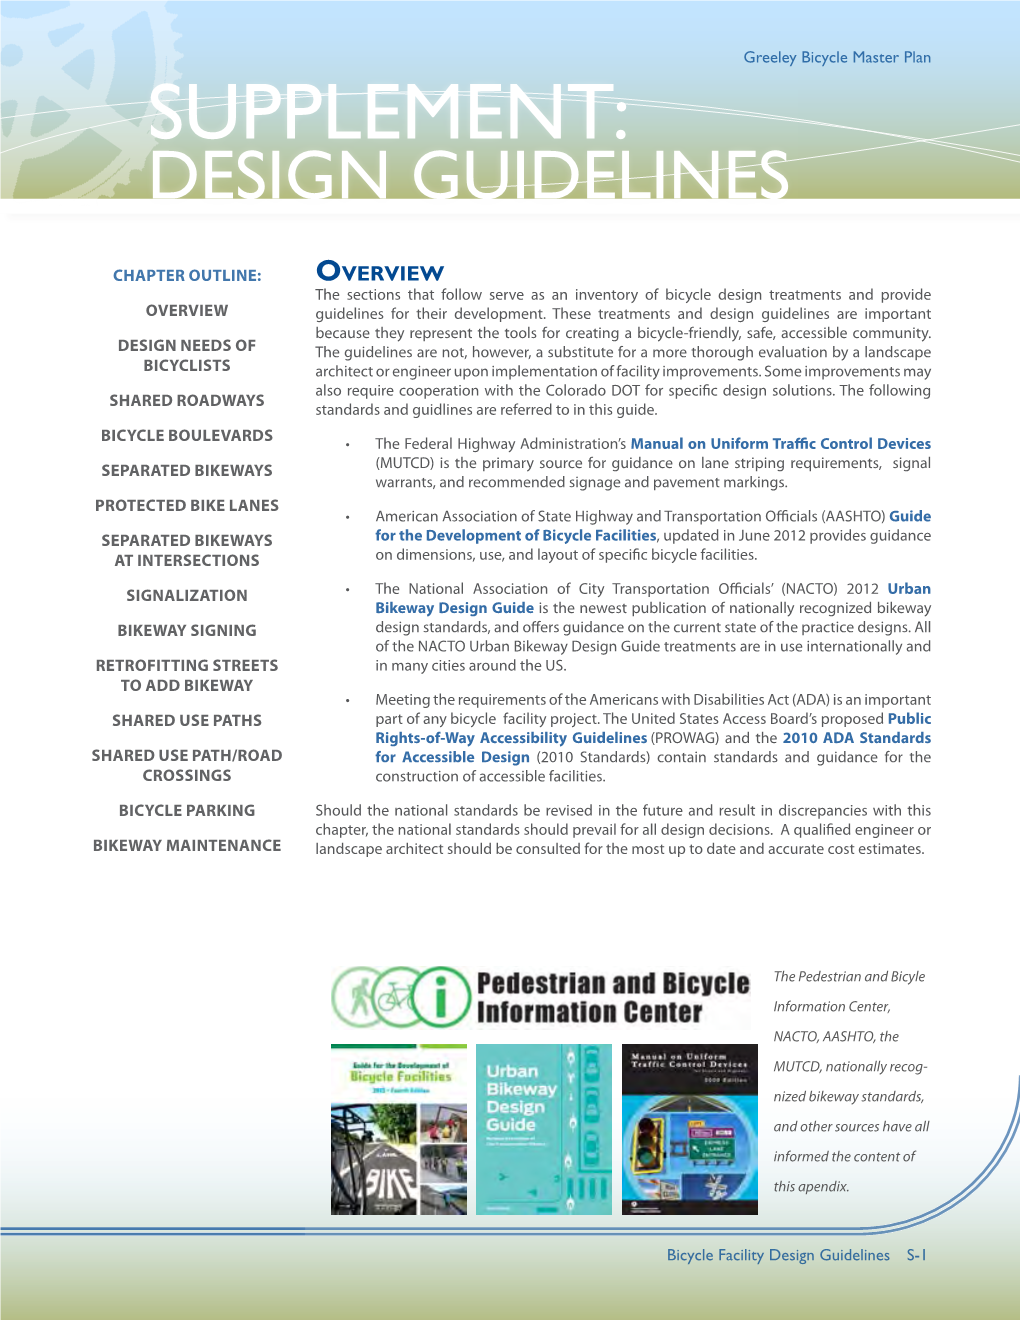 Supplement: Design Guidelines